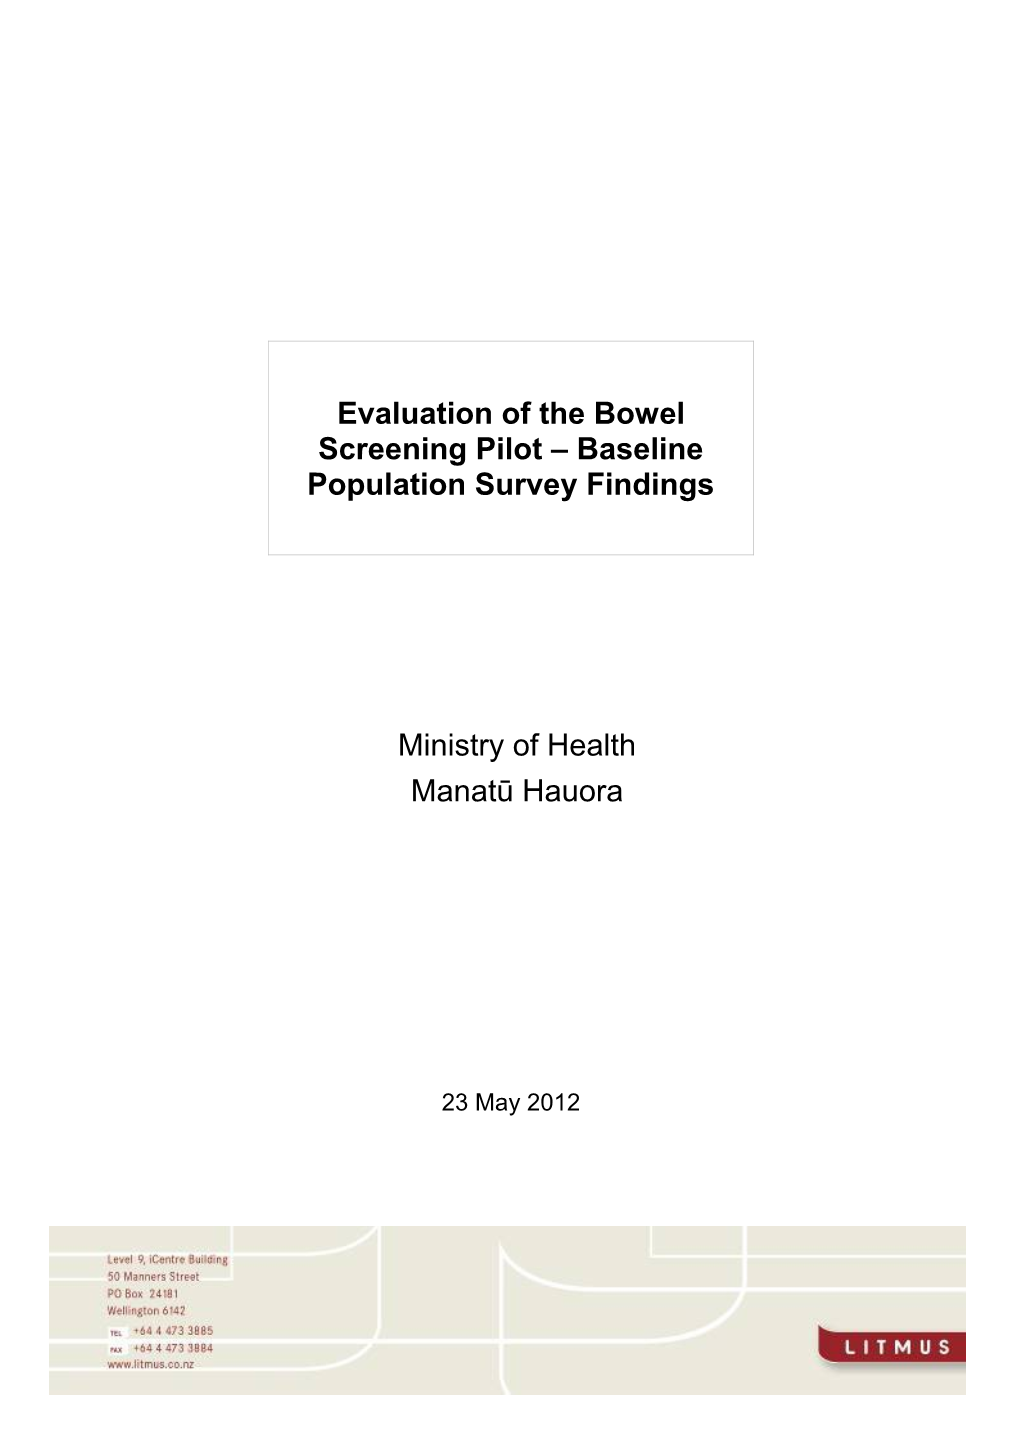 Evaluation of the Bowel Screening Pilot Baseline Population Survey Findings